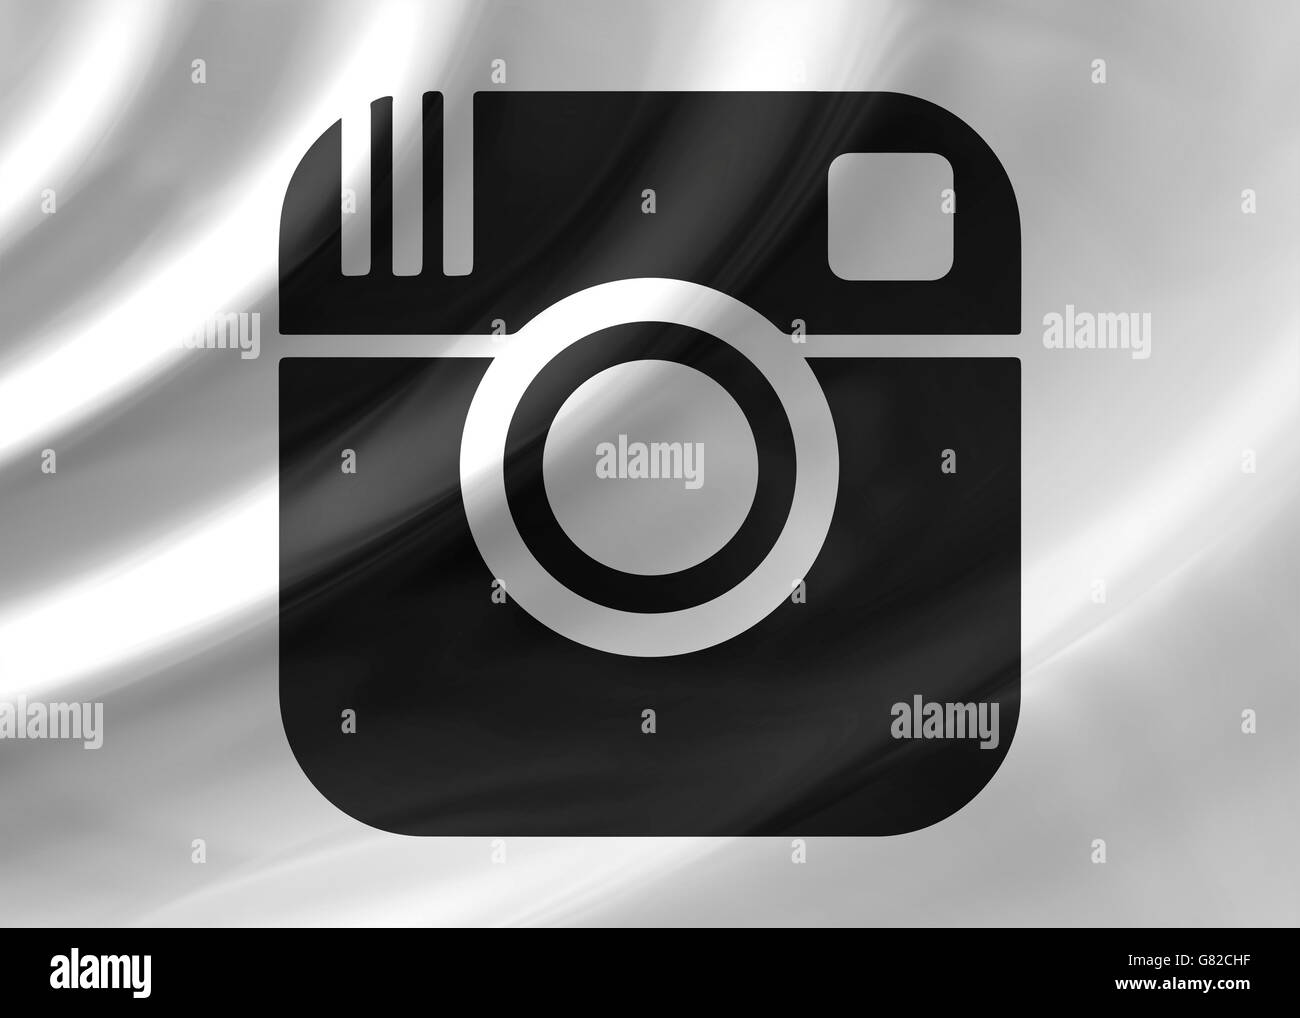 Instagram logo Stock Photo